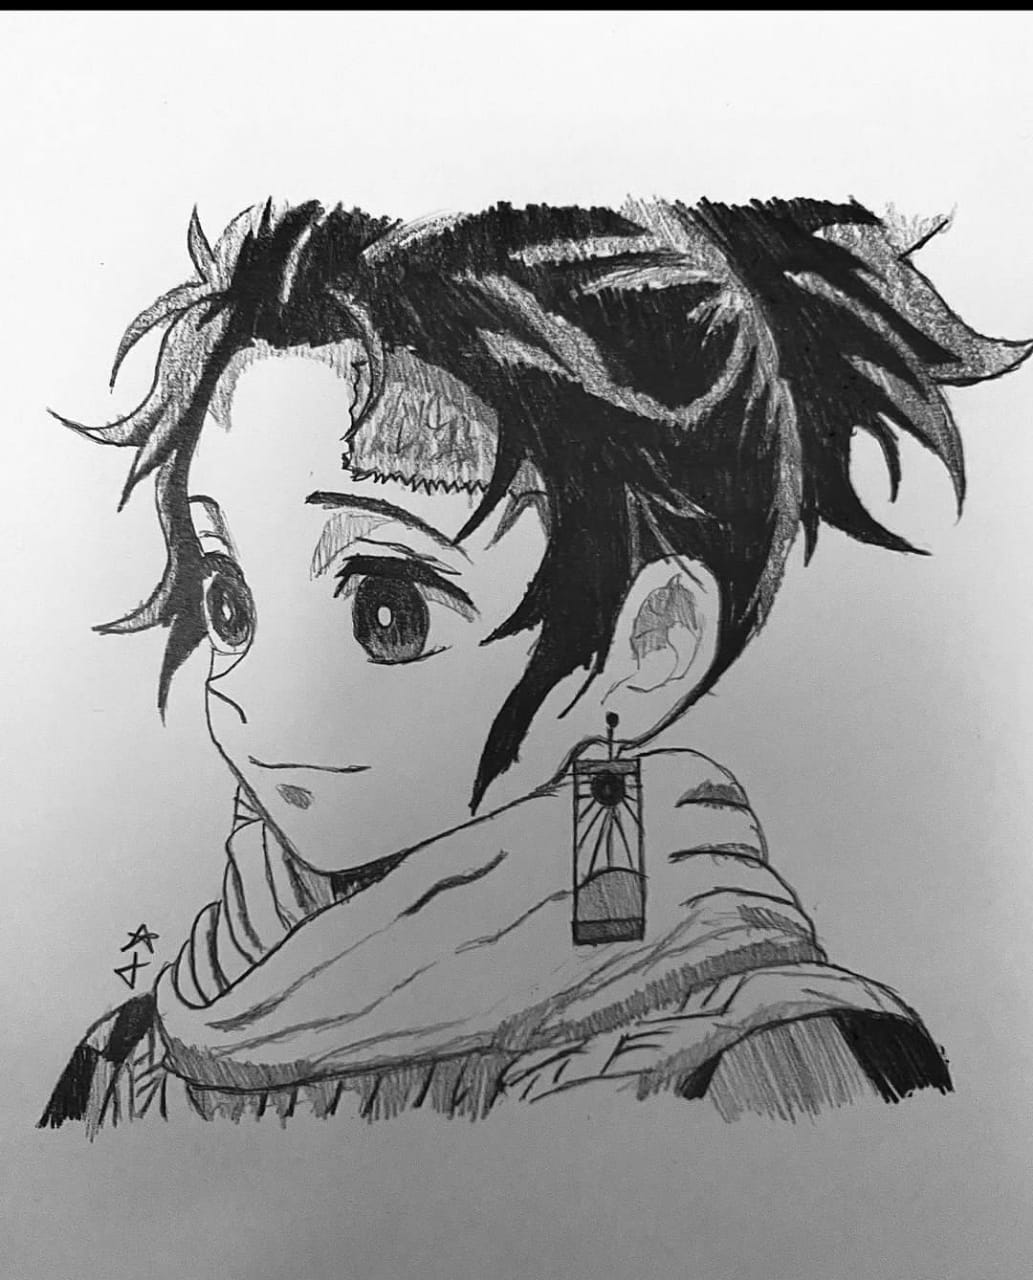 Anime Sketchbook: Drawing Japanese Manga And Kawaii: Anime Sketchbook For  Girls | Comic Manga Anime Sketchbook For Drawing Sketching And Notes |  Blank ... For Drawing Japanese Manga And Kawaii) by Lorena Adams | Goodreads